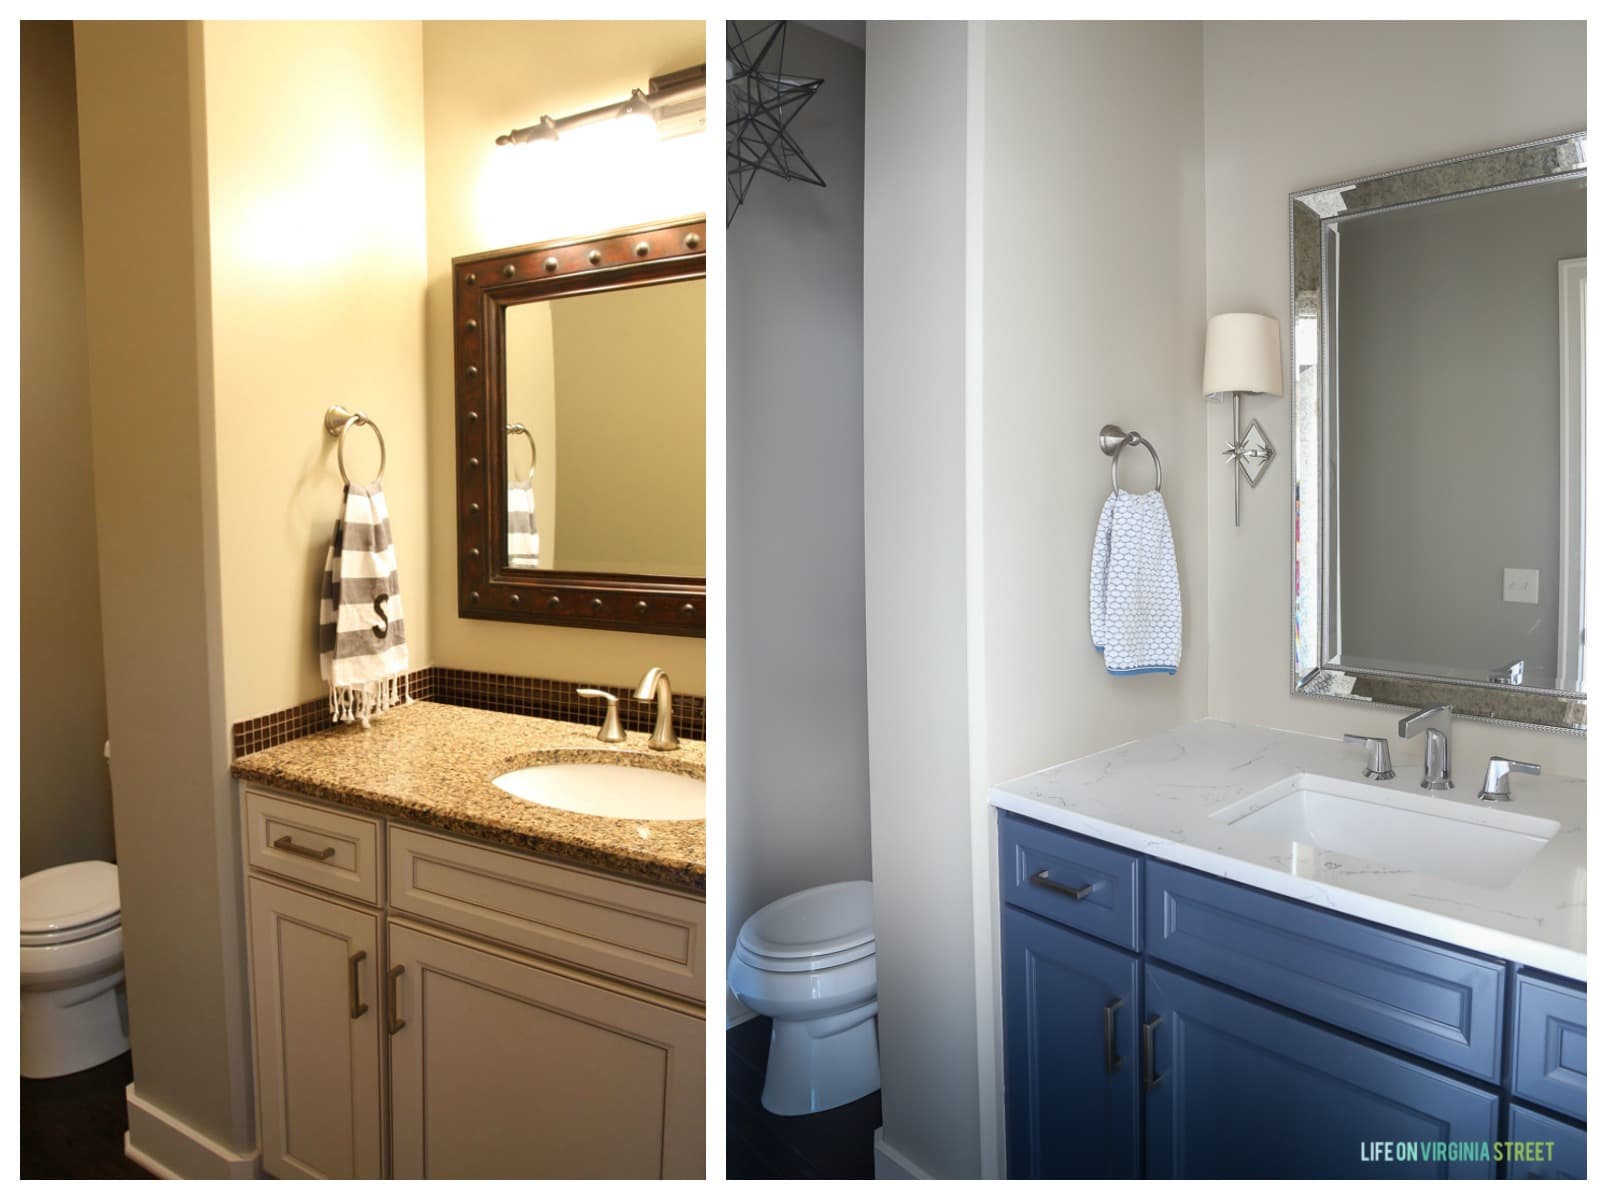 Powder Bathroom Renovation Reveal | Life on Virginia Street